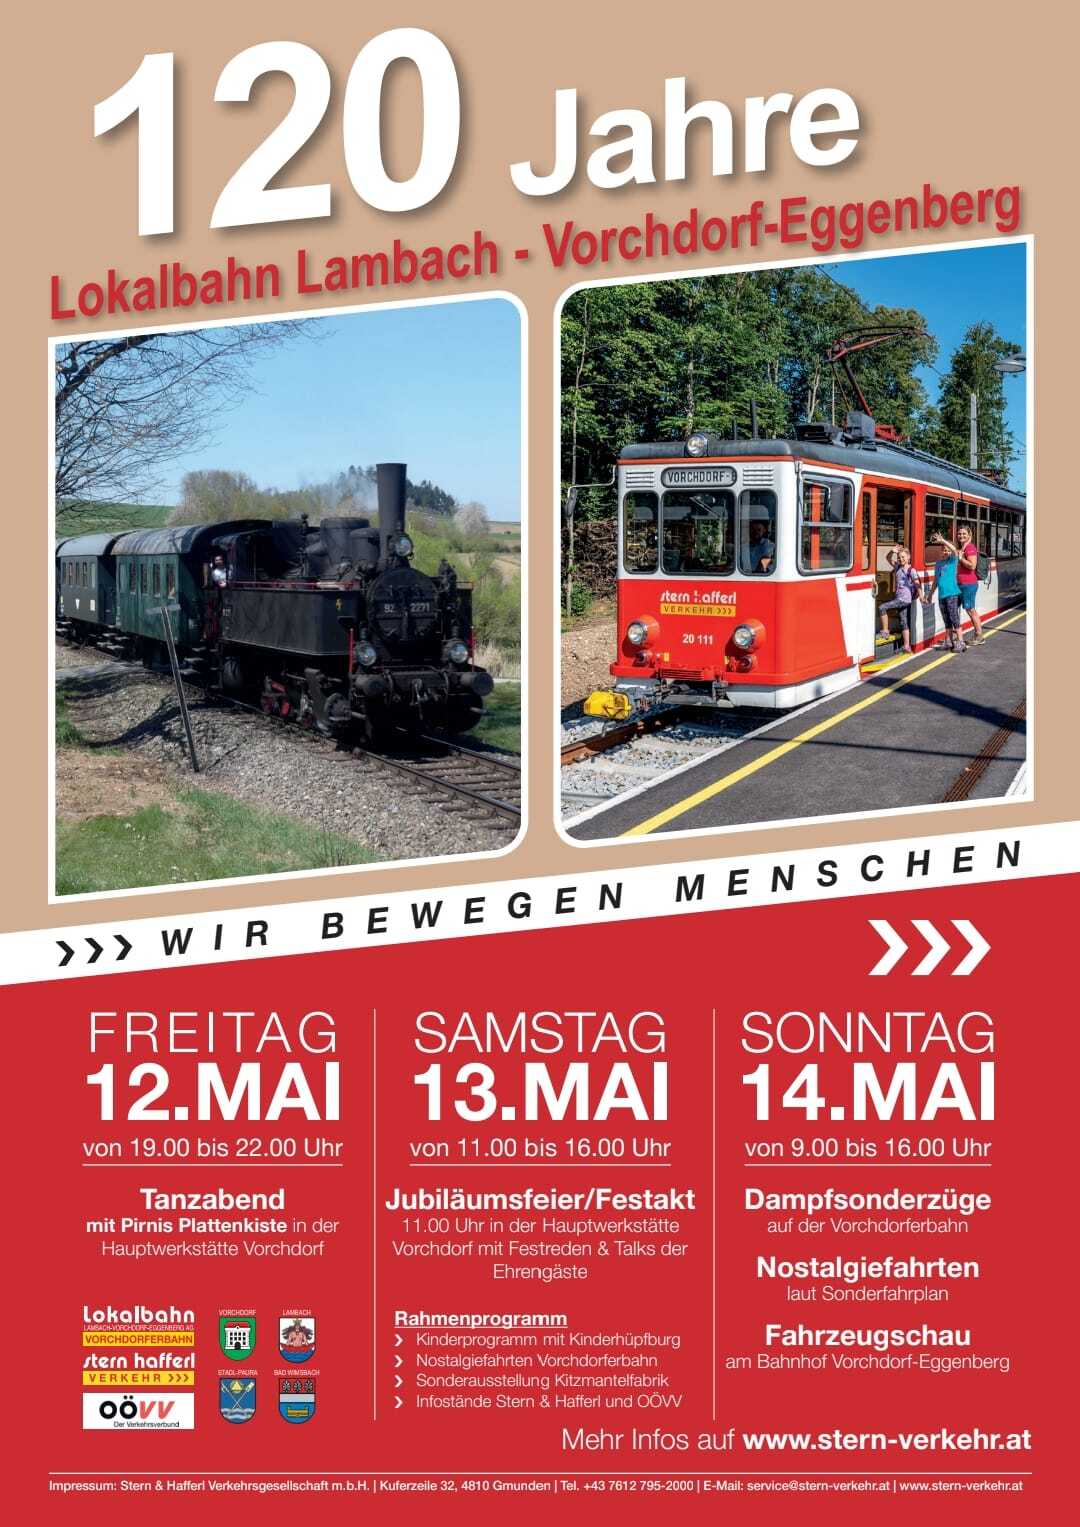 Plakat: 120 Jahre Lokalbahn Lambach - Vorchdorf-Eggenberg